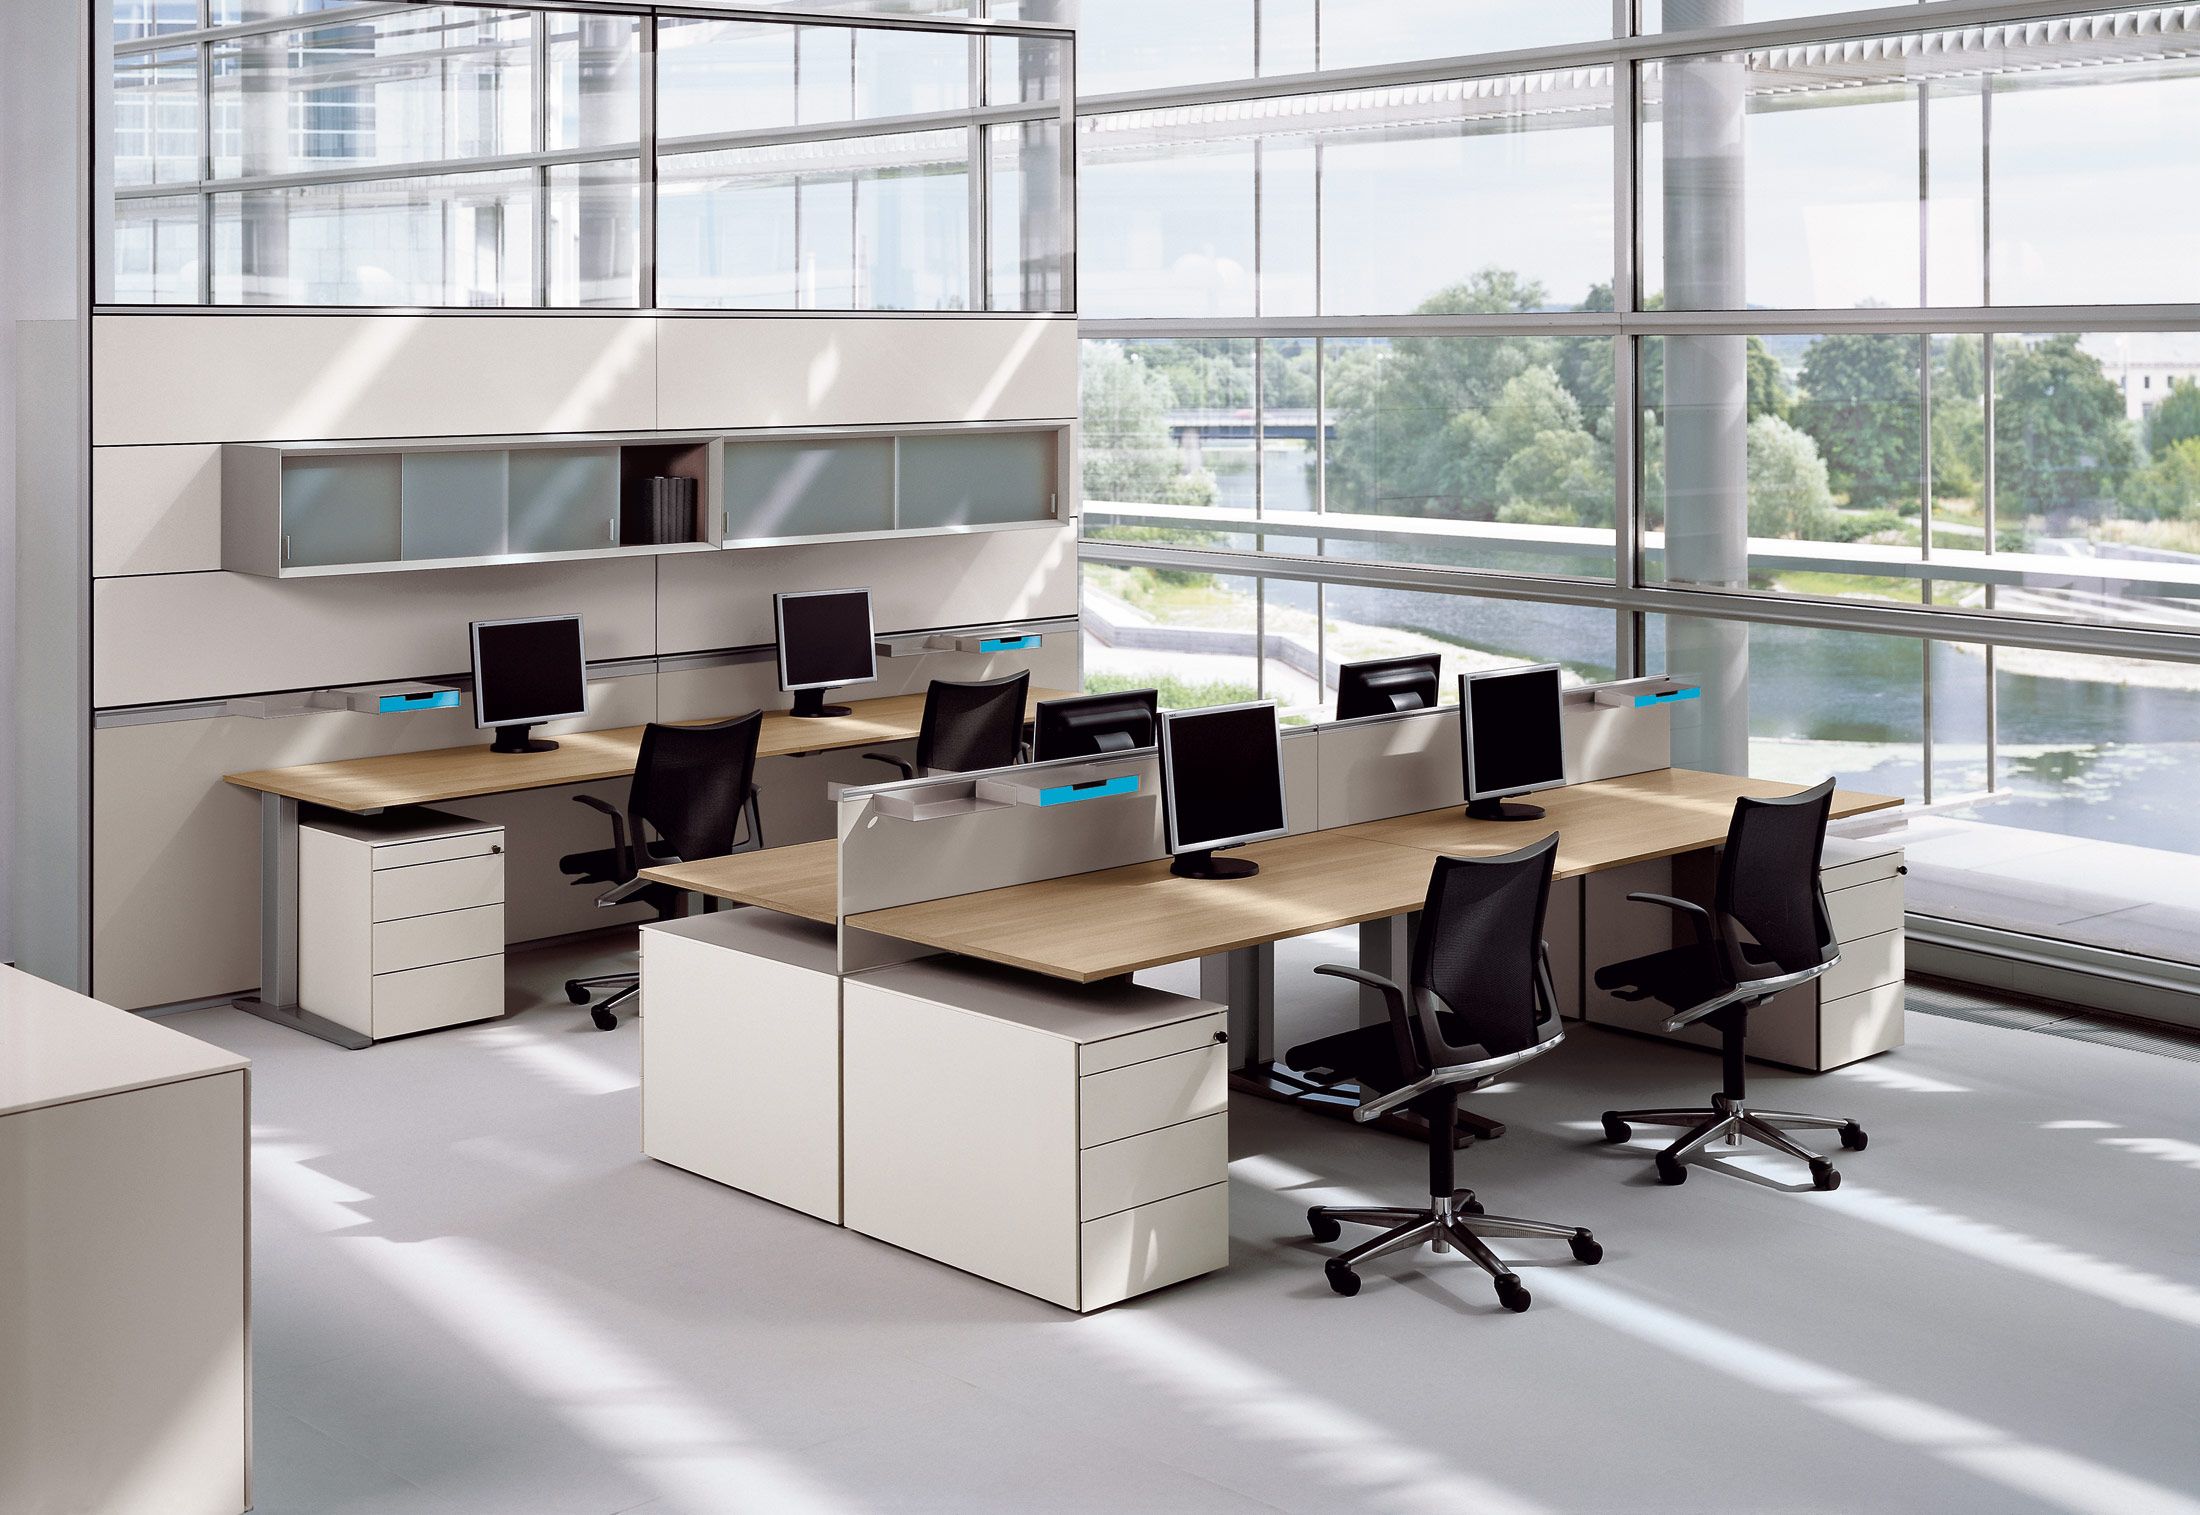 Sale of office desks in Israel